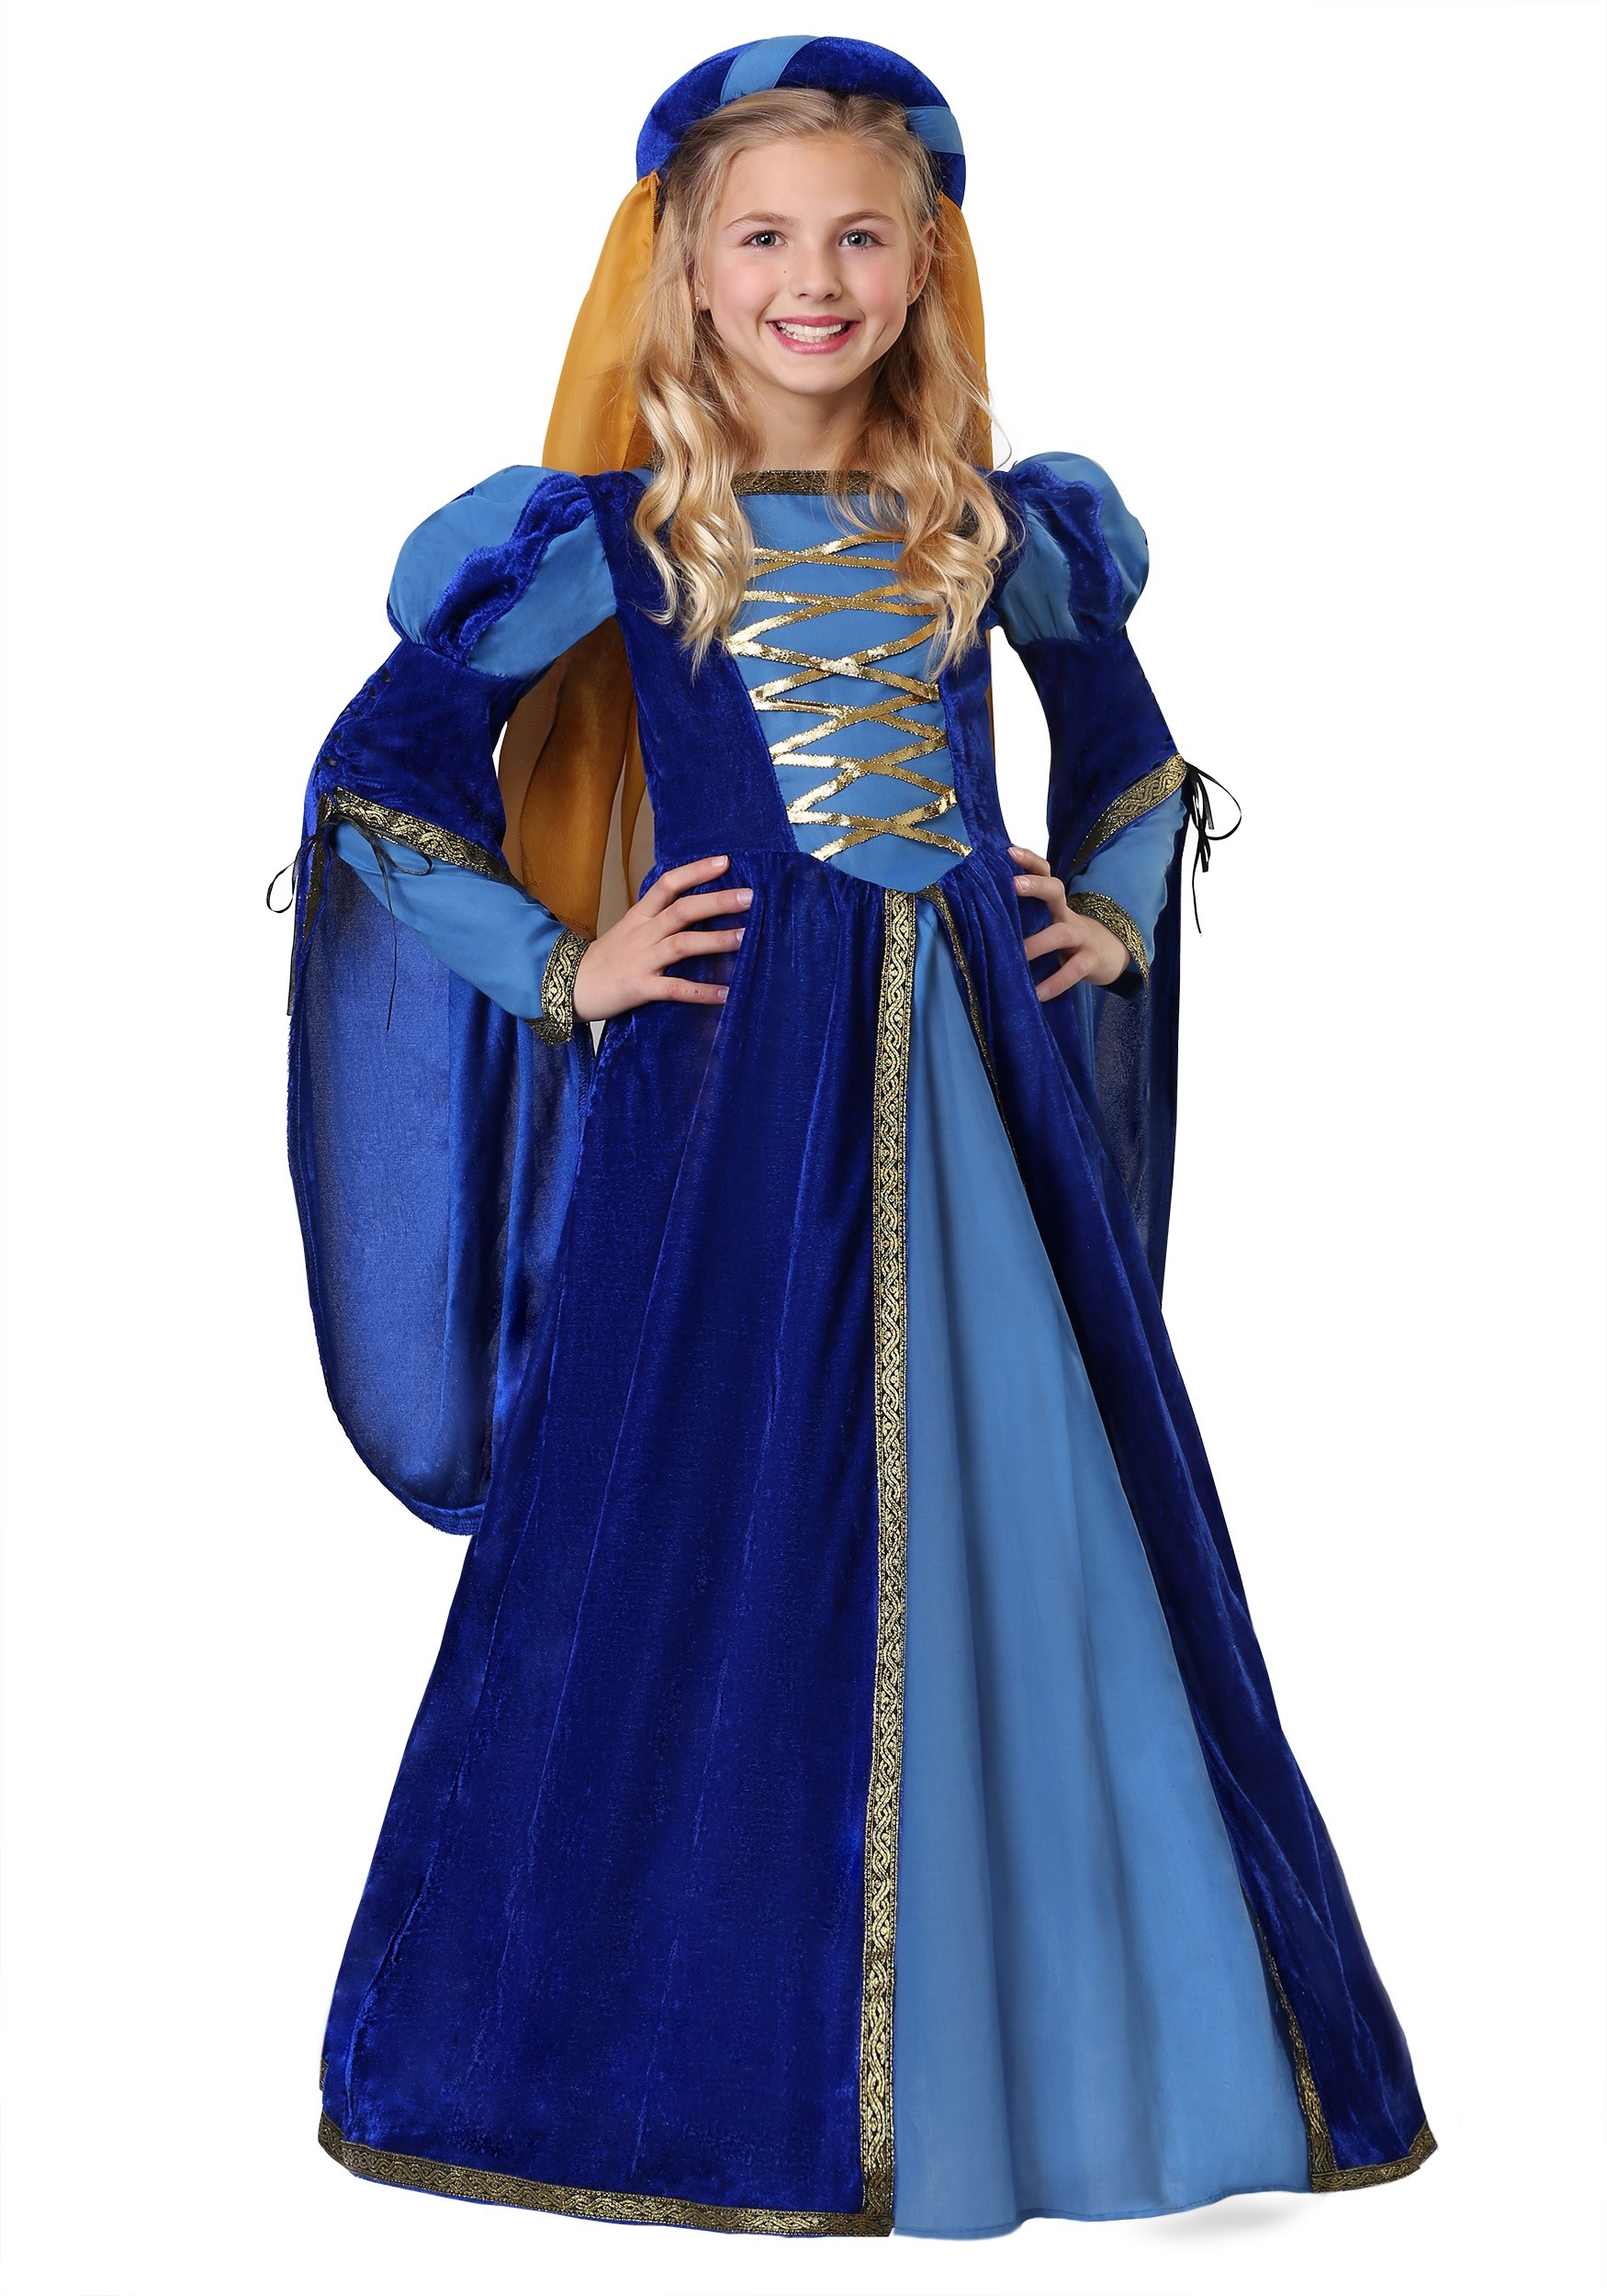 Photos - Fancy Dress FUN Costumes Renaissance Queen for Girls Costume Orange/Blue